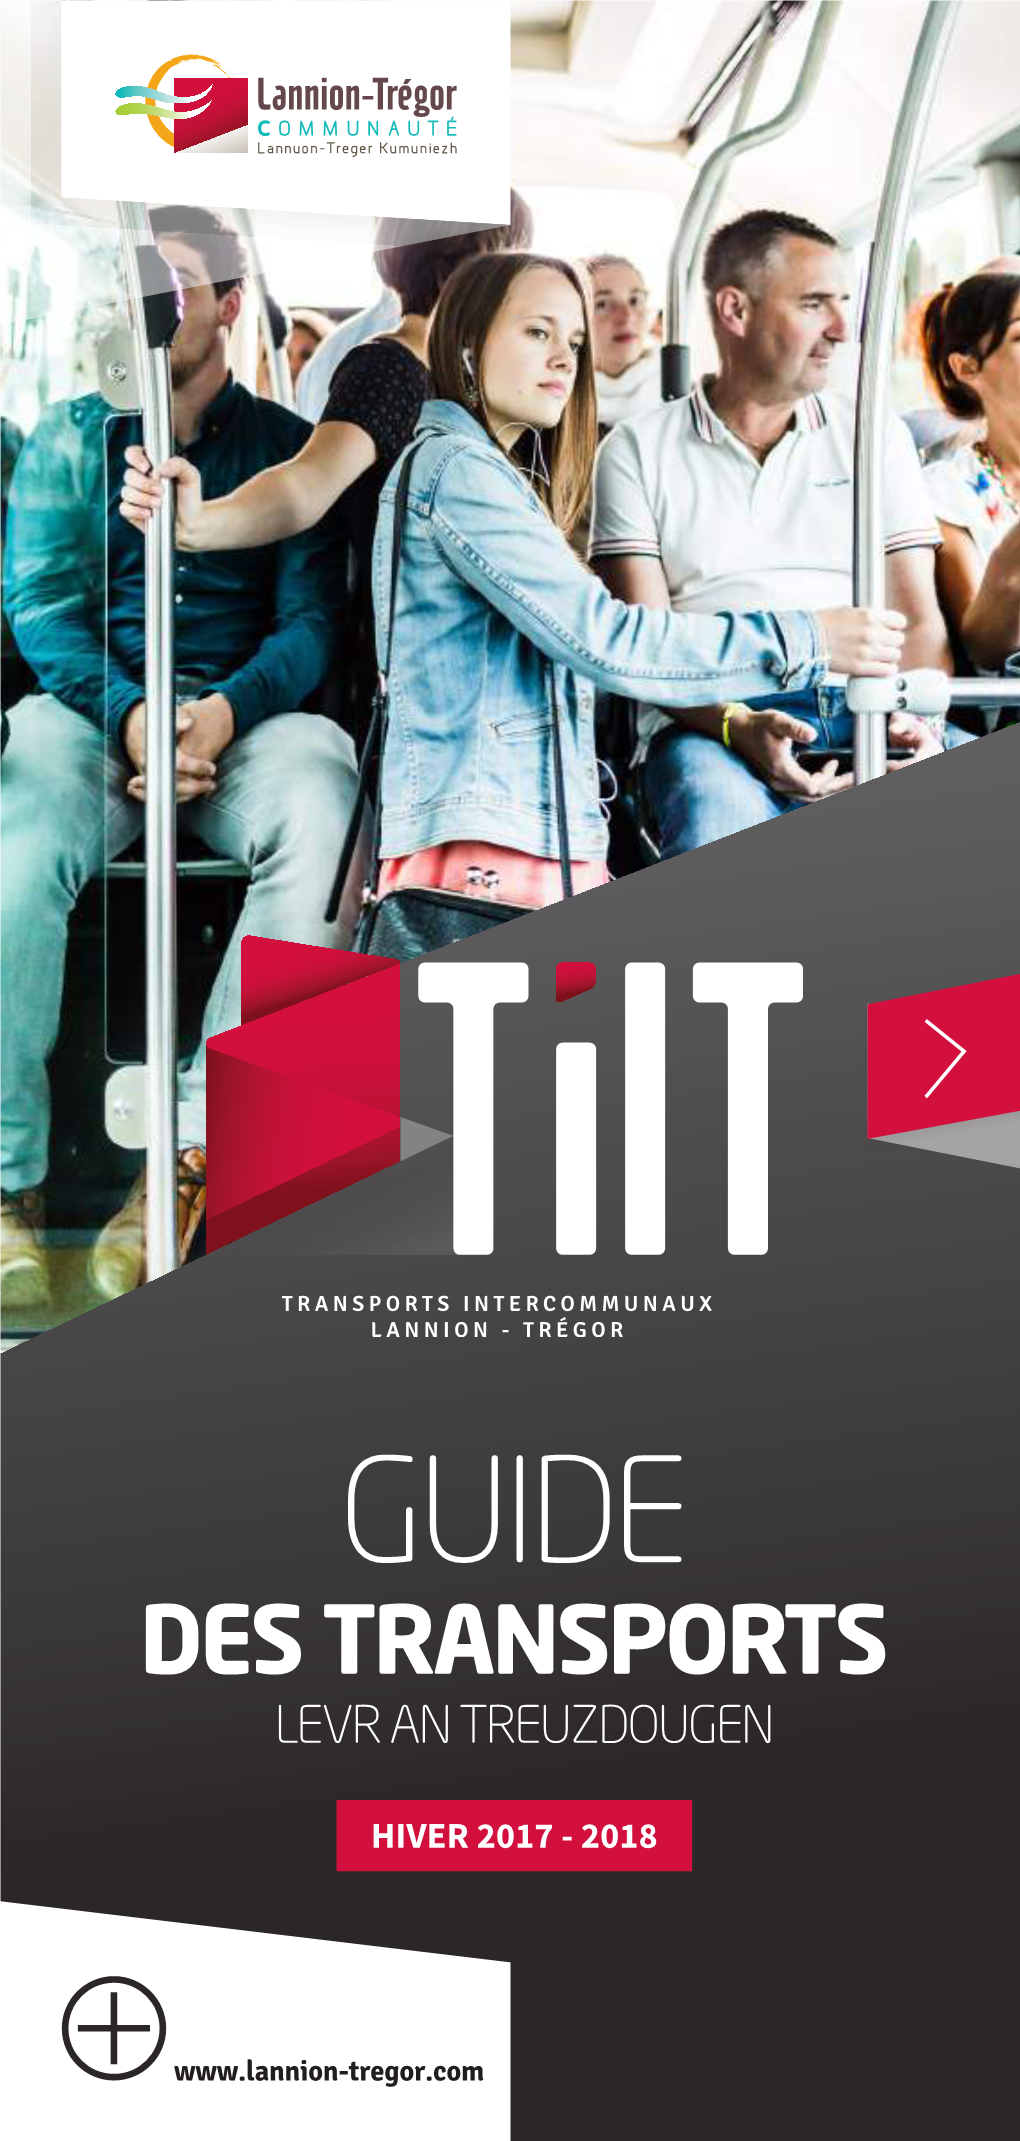 Tilt-Brochure Hiver2017-2018.Pdf (